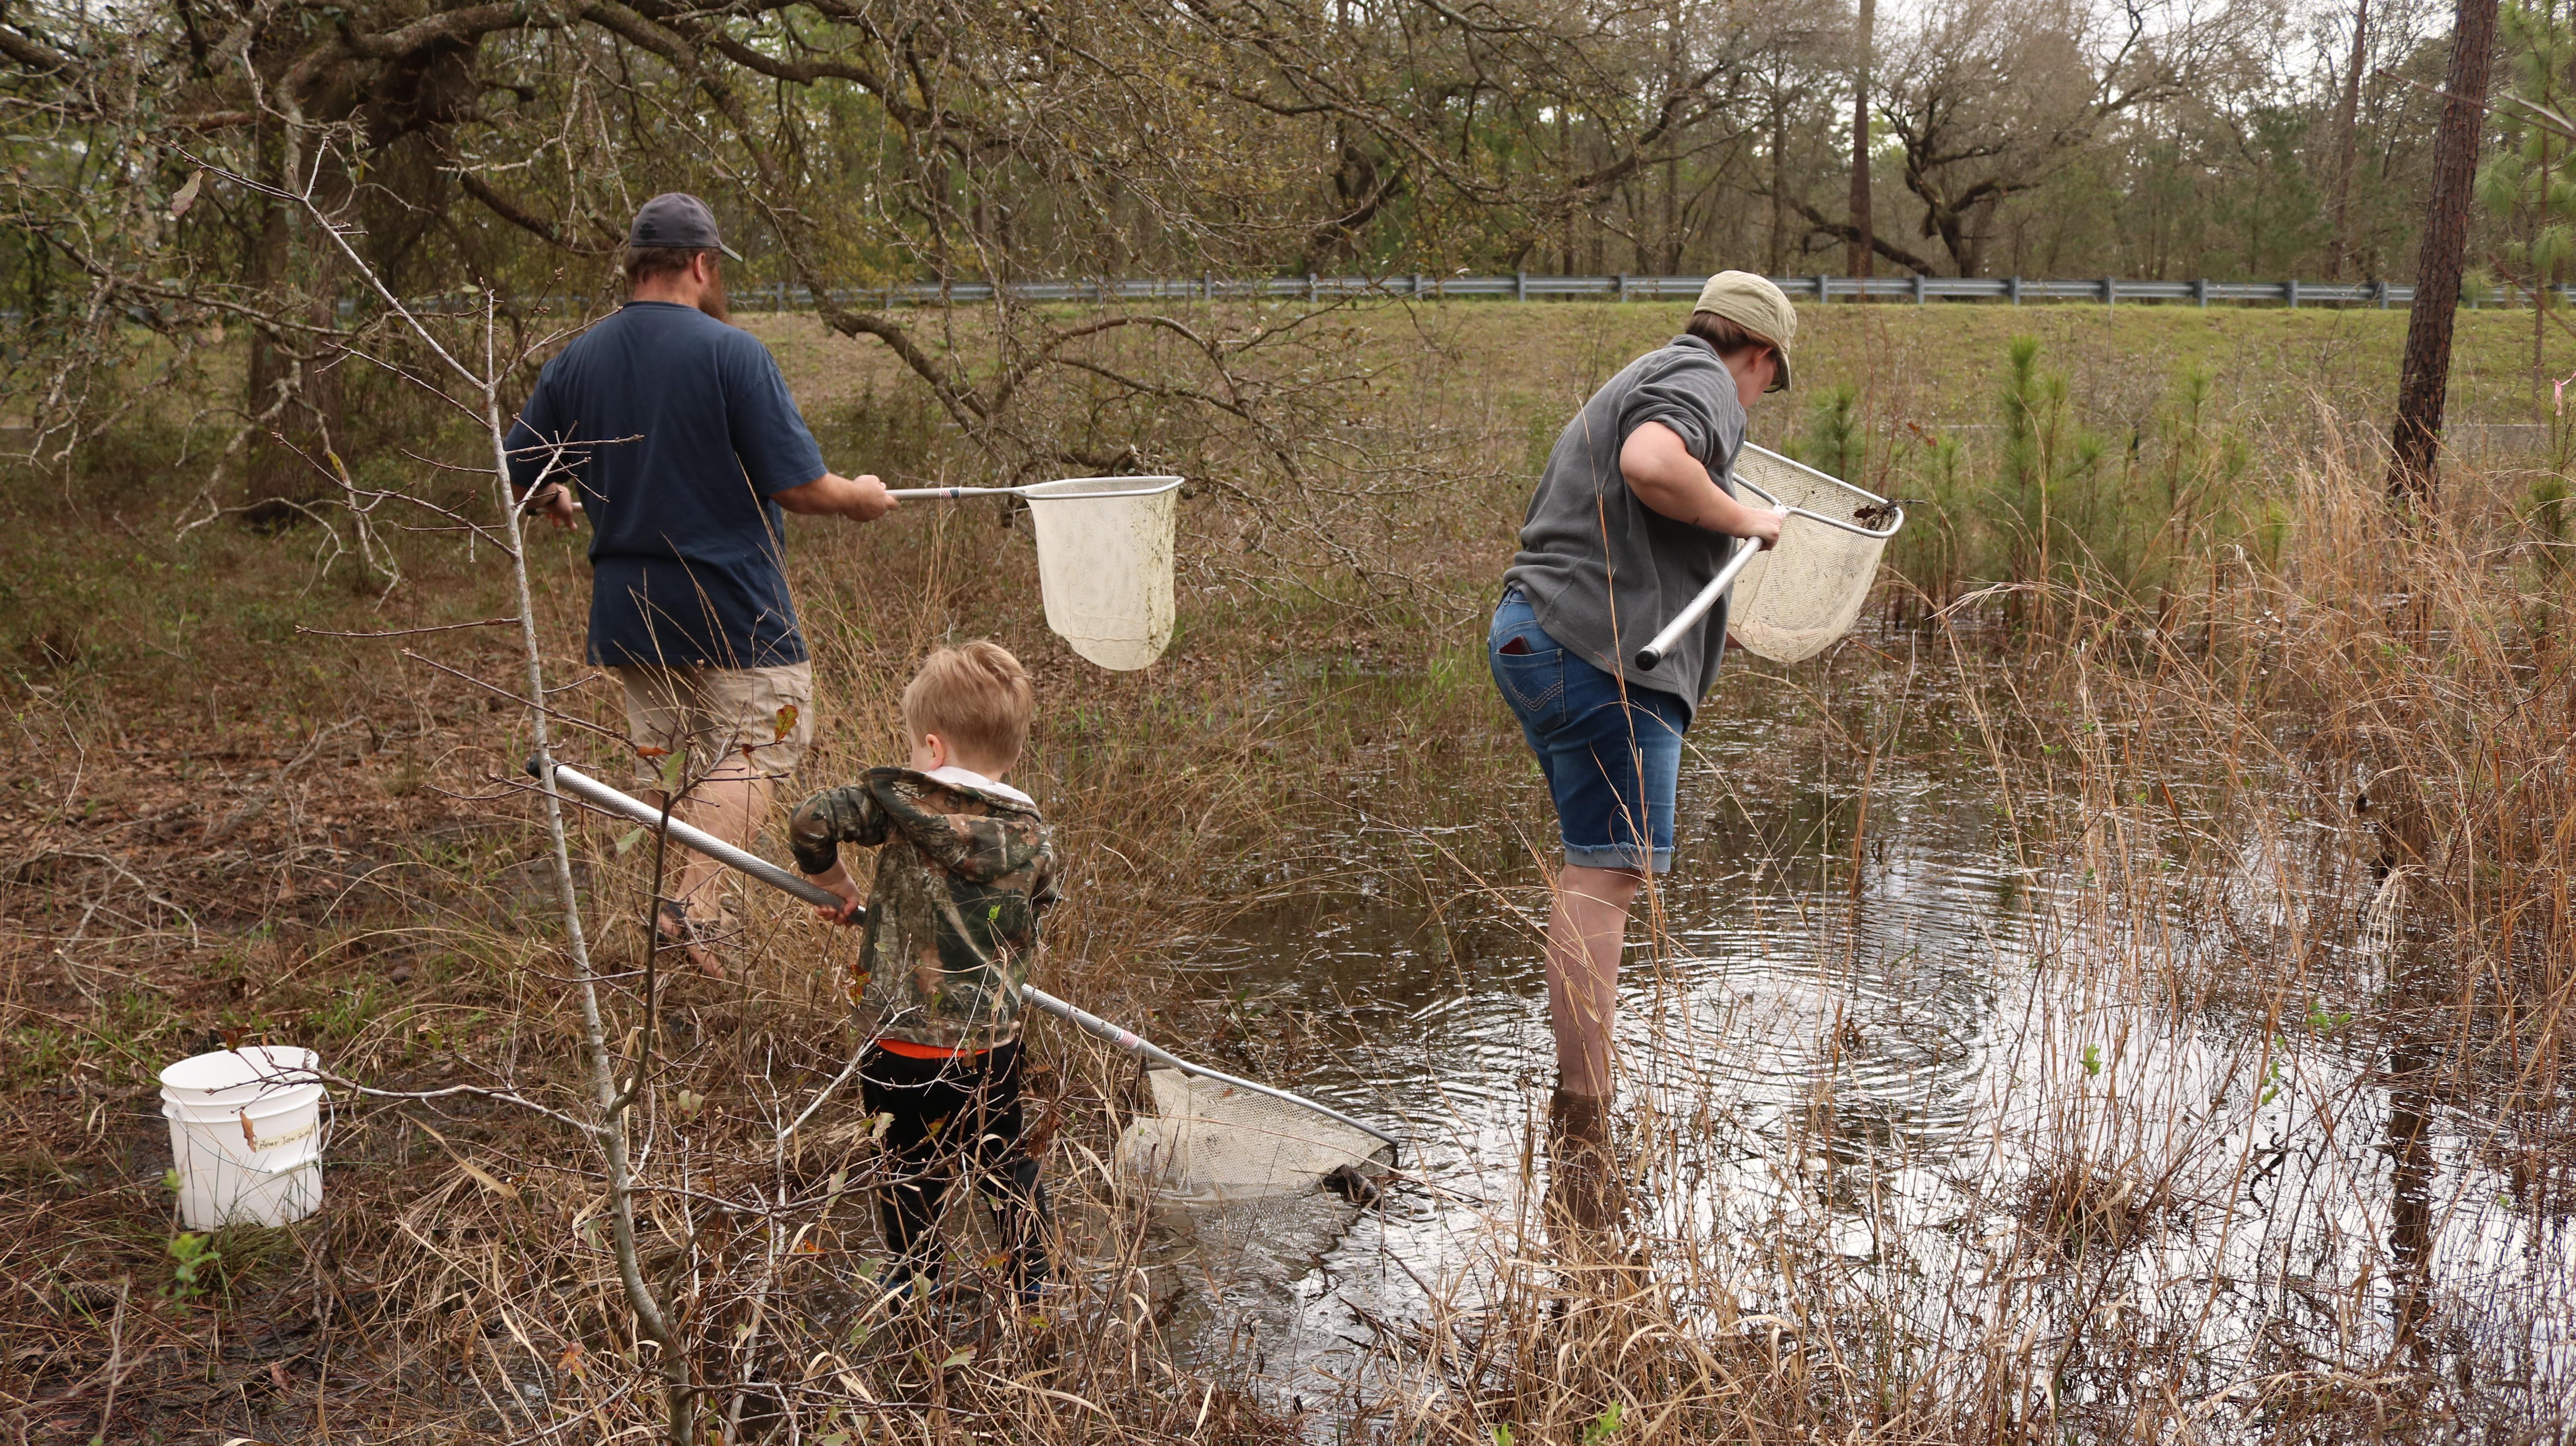 Adopt an Ephemeral Wetland: Family Friendly Citizen Science